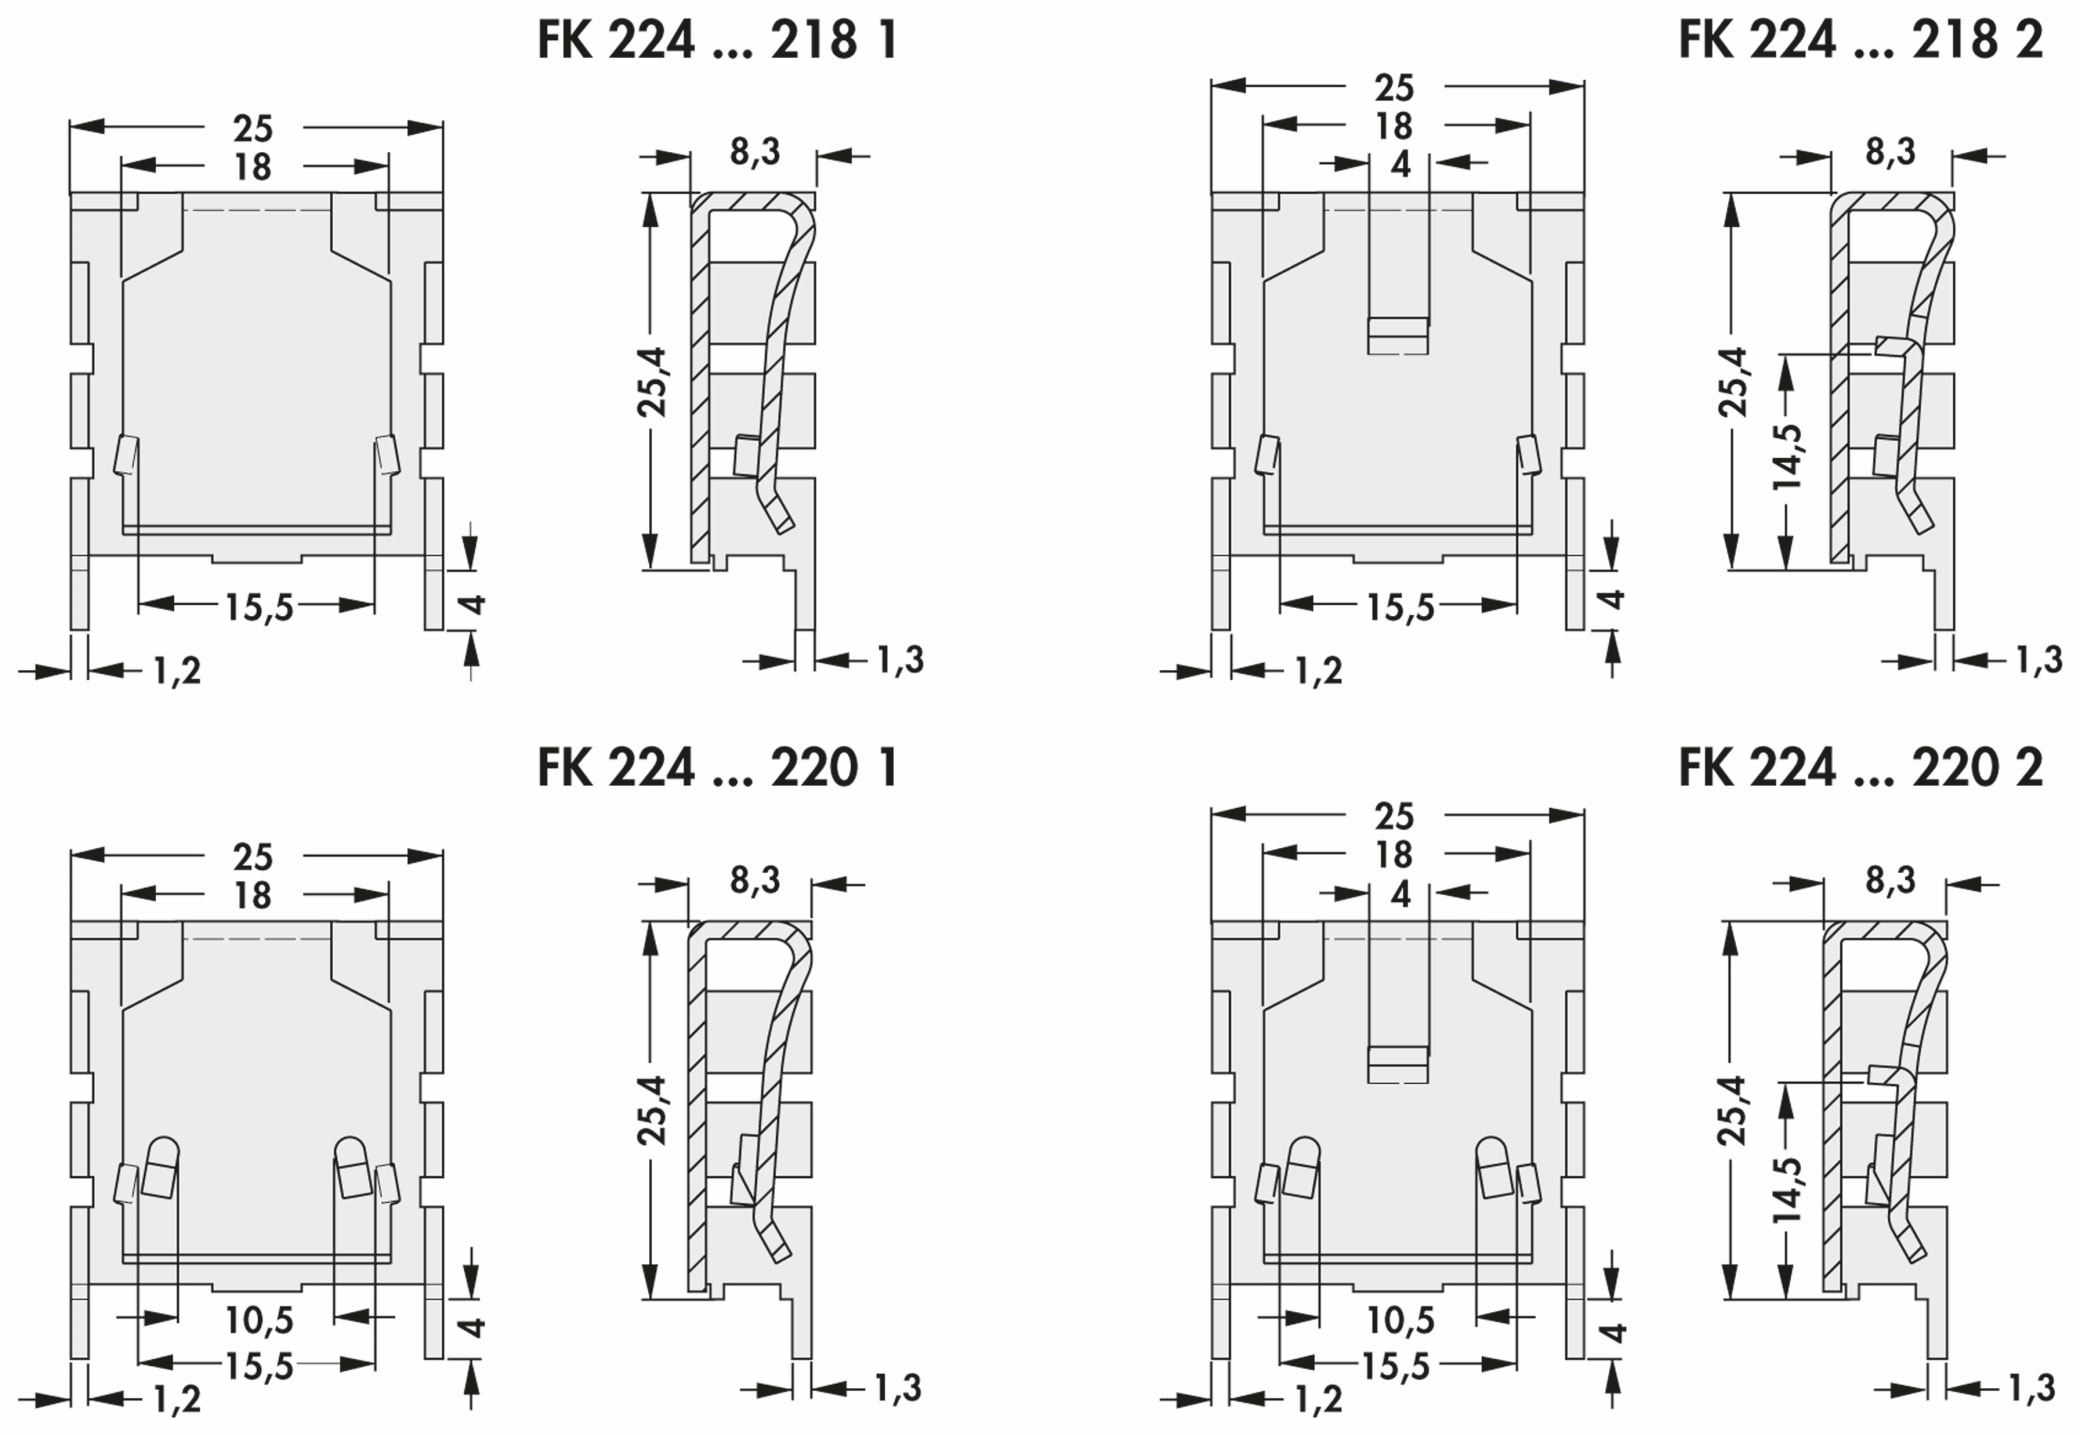 FISCHER ELEKTRONIK Kühlkörper, FK 224 MI 218-1, Fingerkühlkörper, schwarz, Aluminium